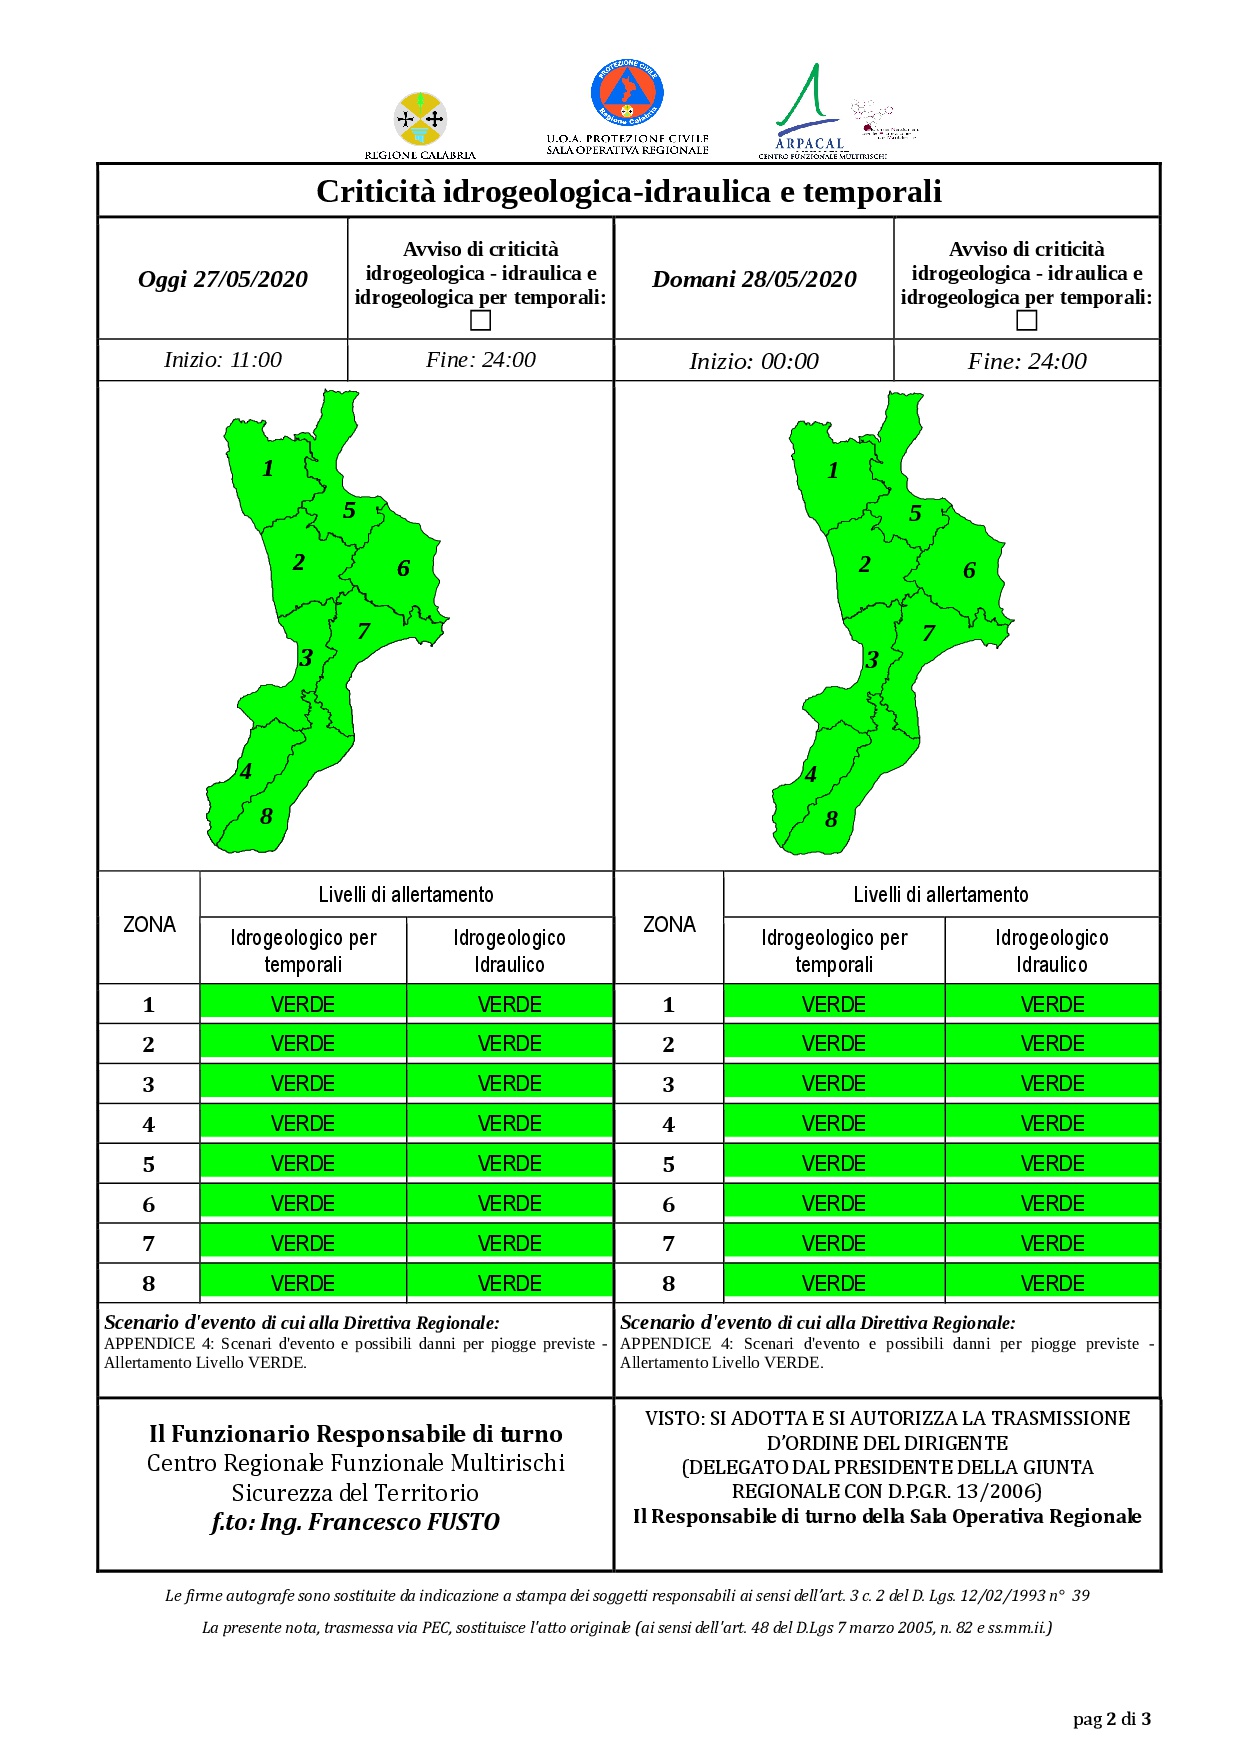 Criticità idrogeologica-idraulica e temporali in Calabria 27-05-2020